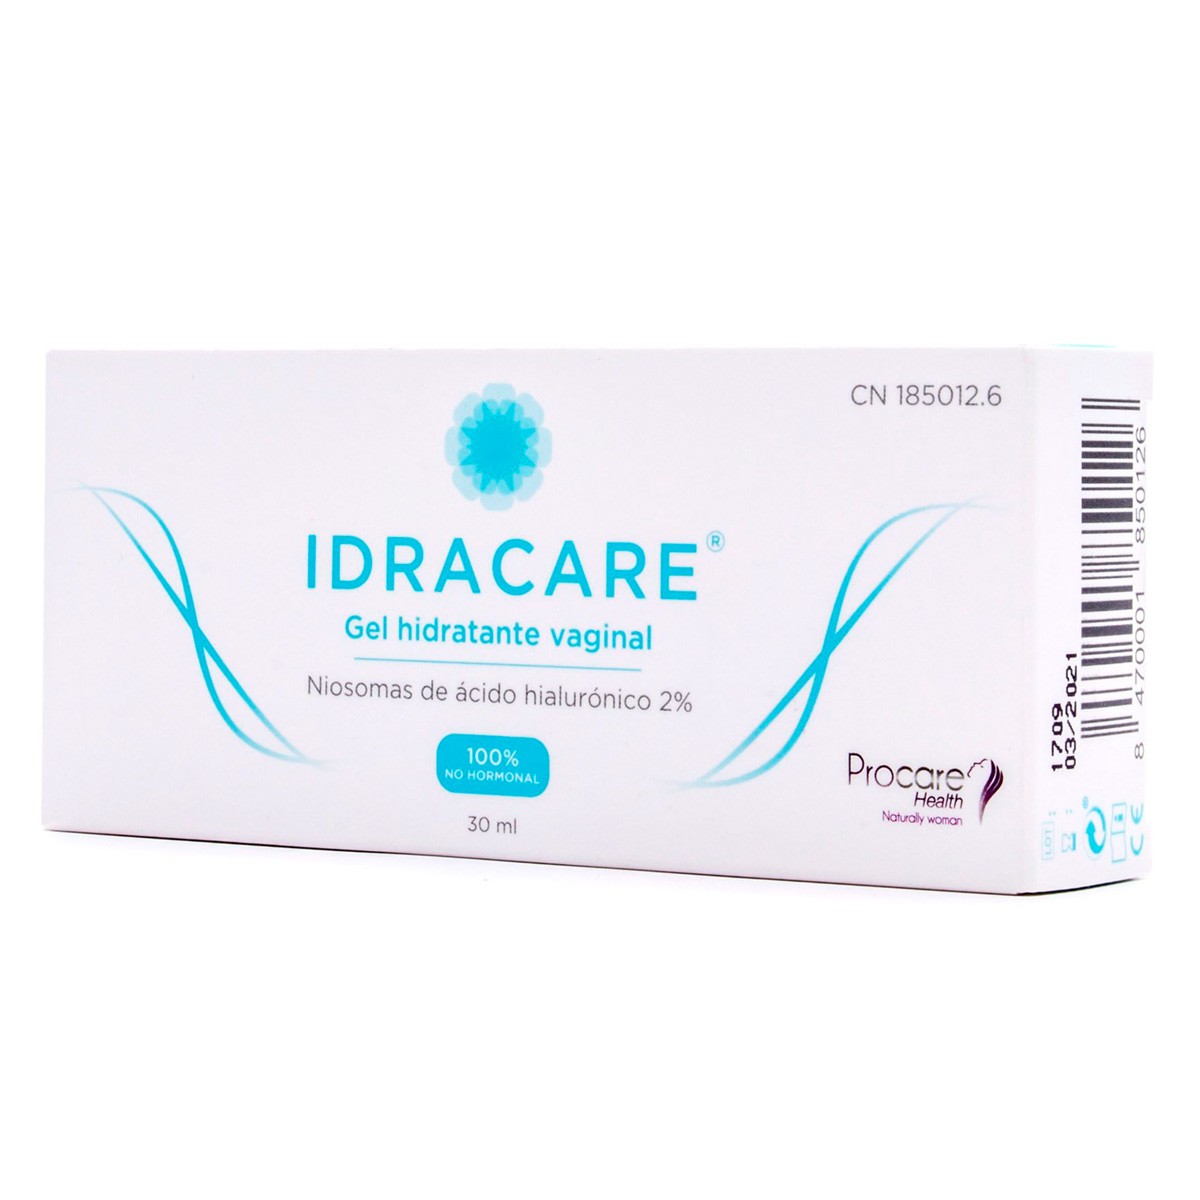 Idracare gel hidratante vaginal 30ml